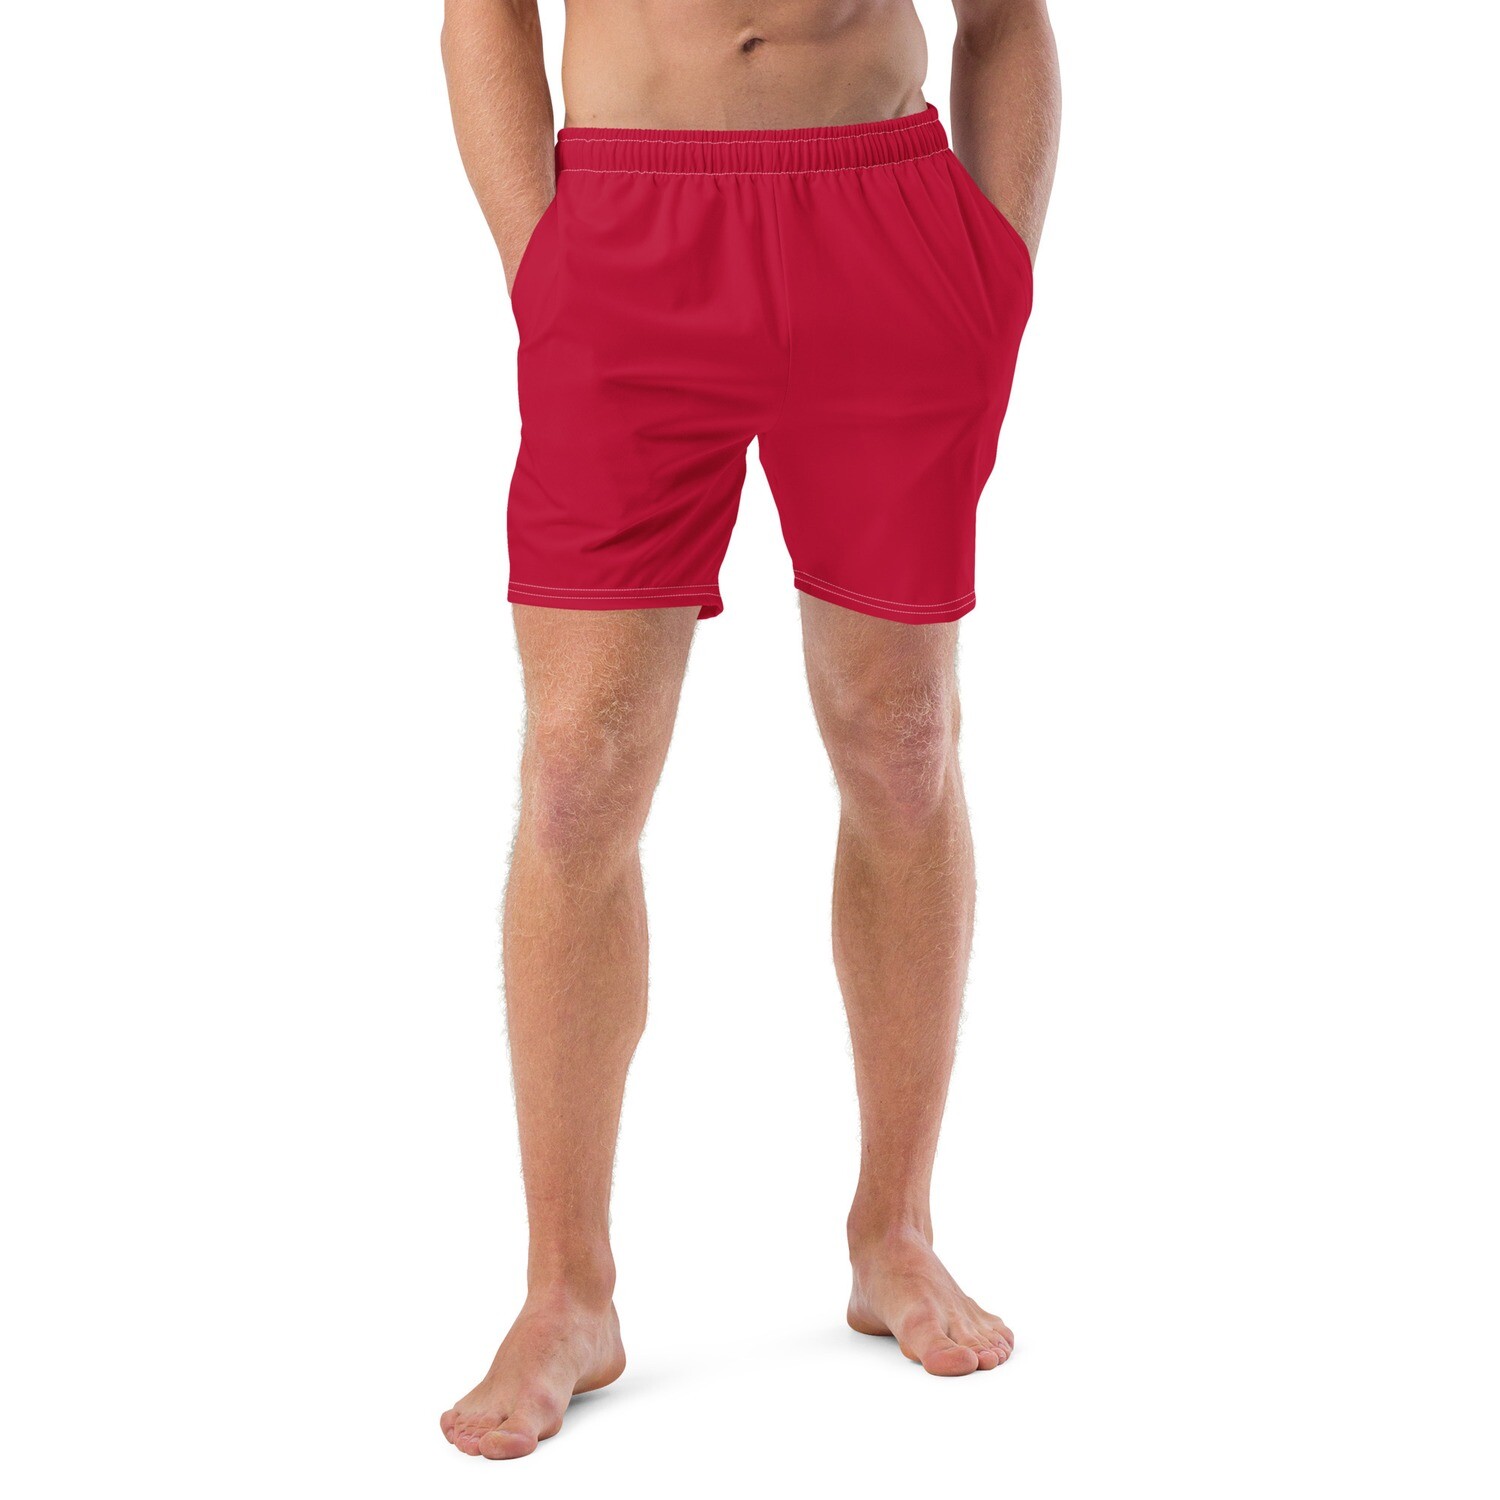 Men's hibiscus red swim trunks in sizes 2XS-6XL